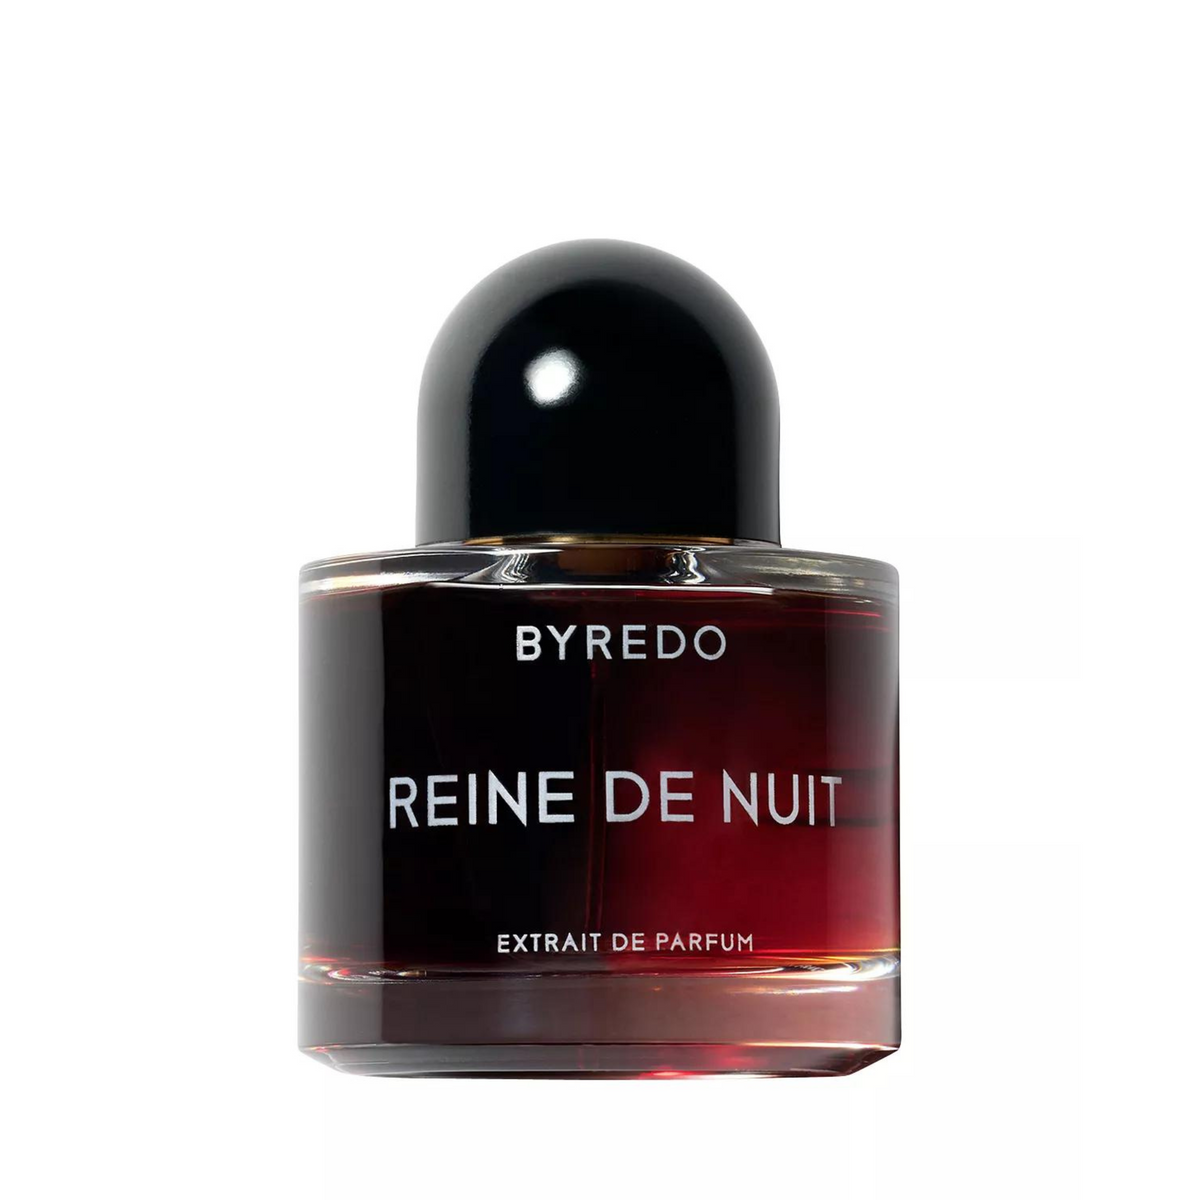 Primary Image of Reine de Nuit (Night Veils) Perfume Extract